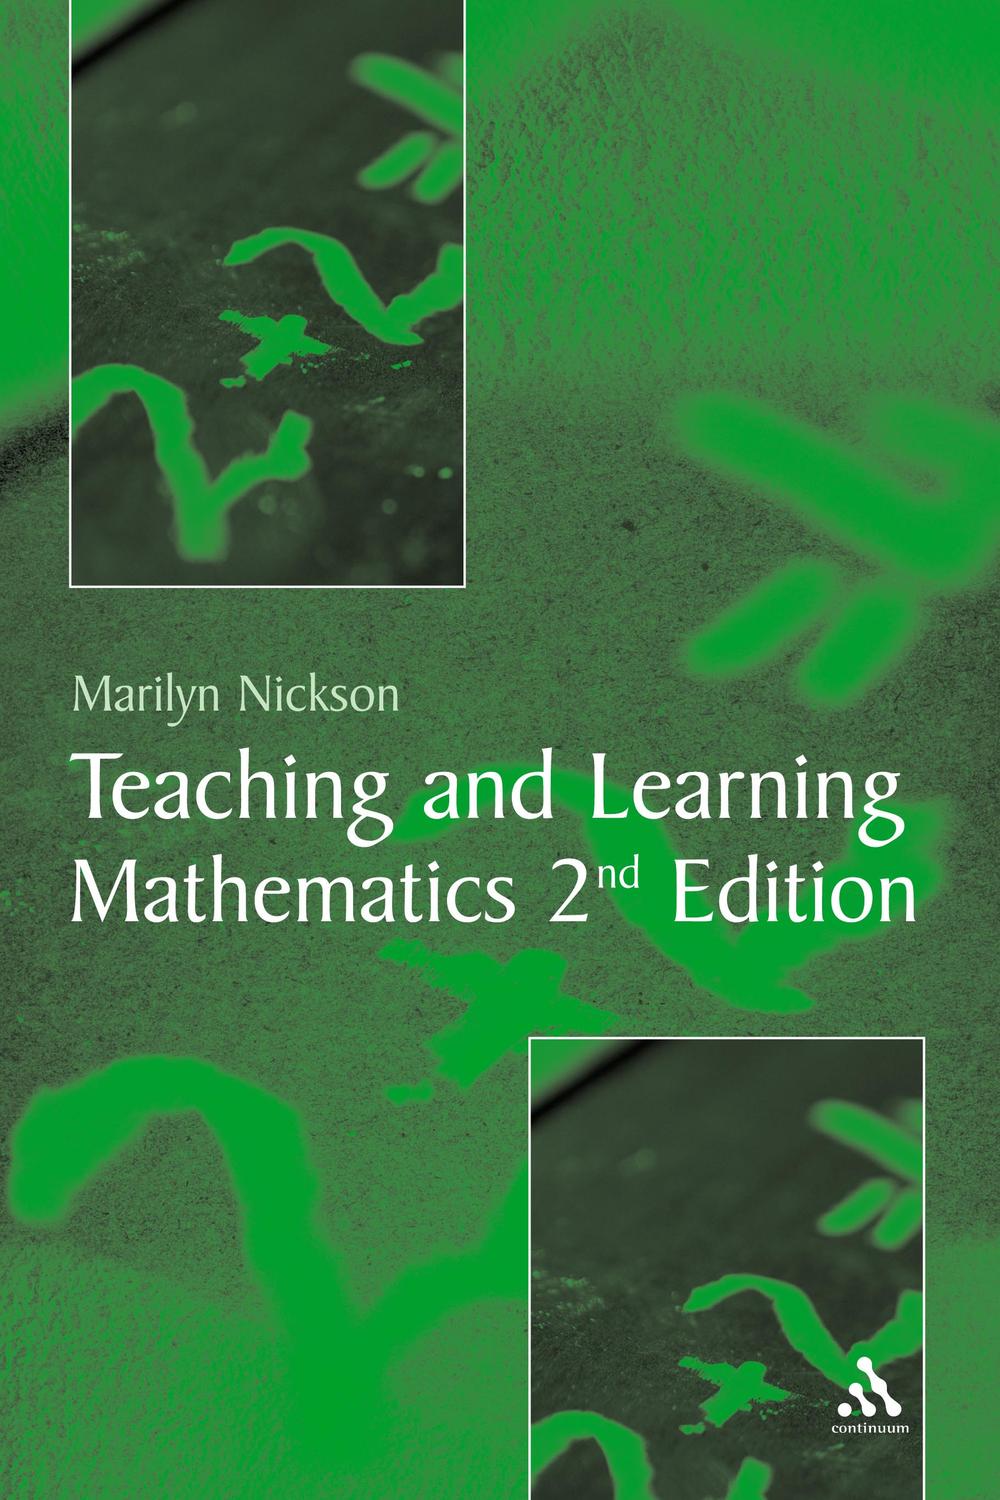 Teaching and Learning Mathematics - Marilyn Nickson